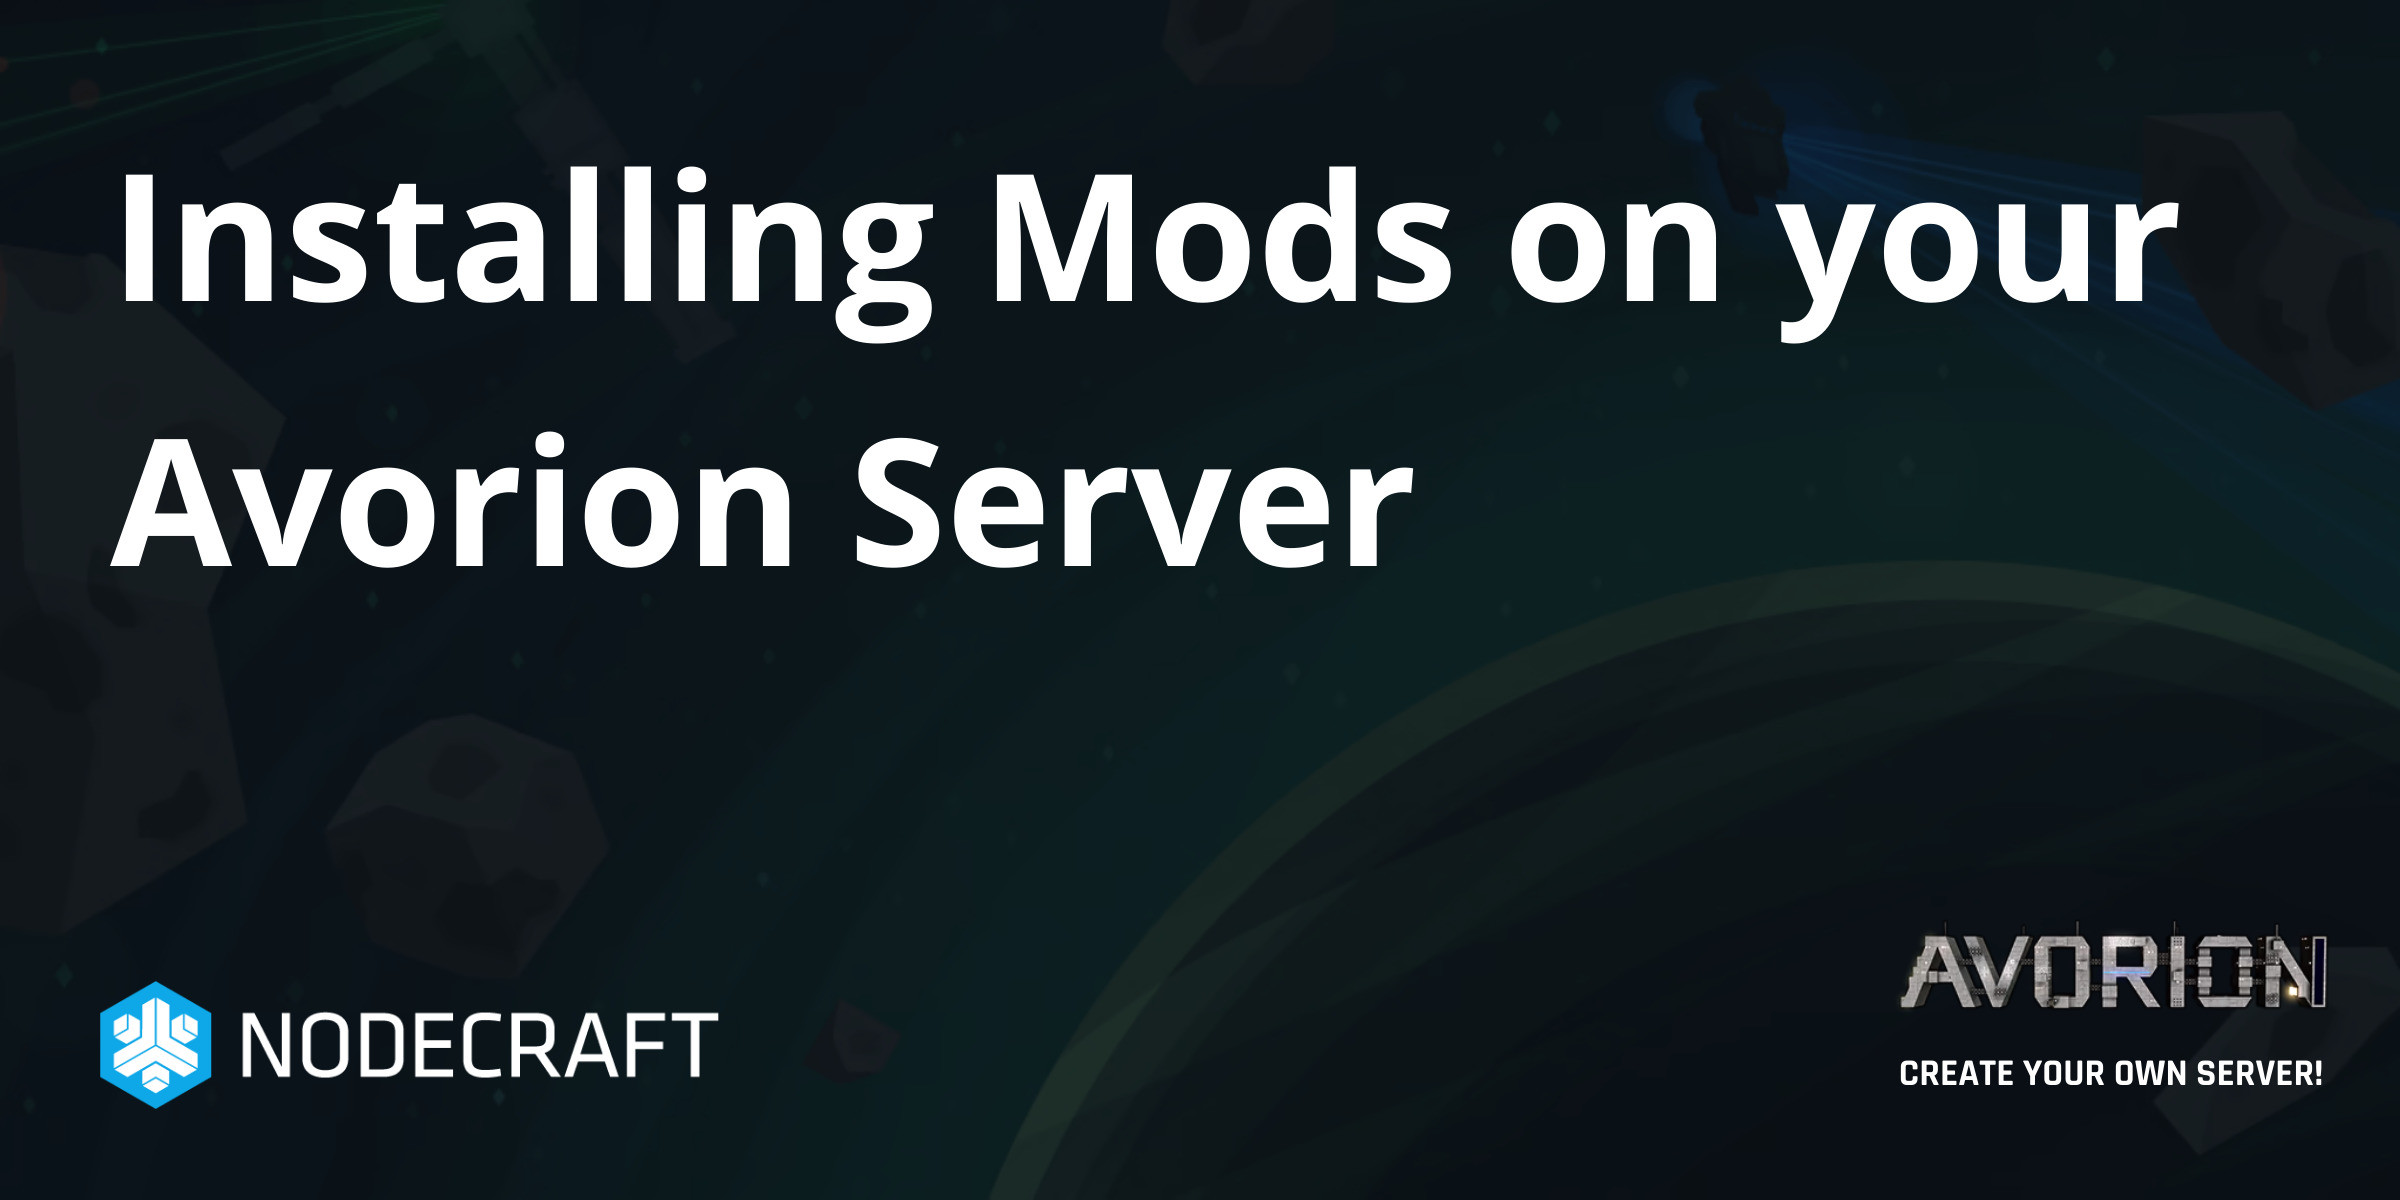 Installing mods on a server